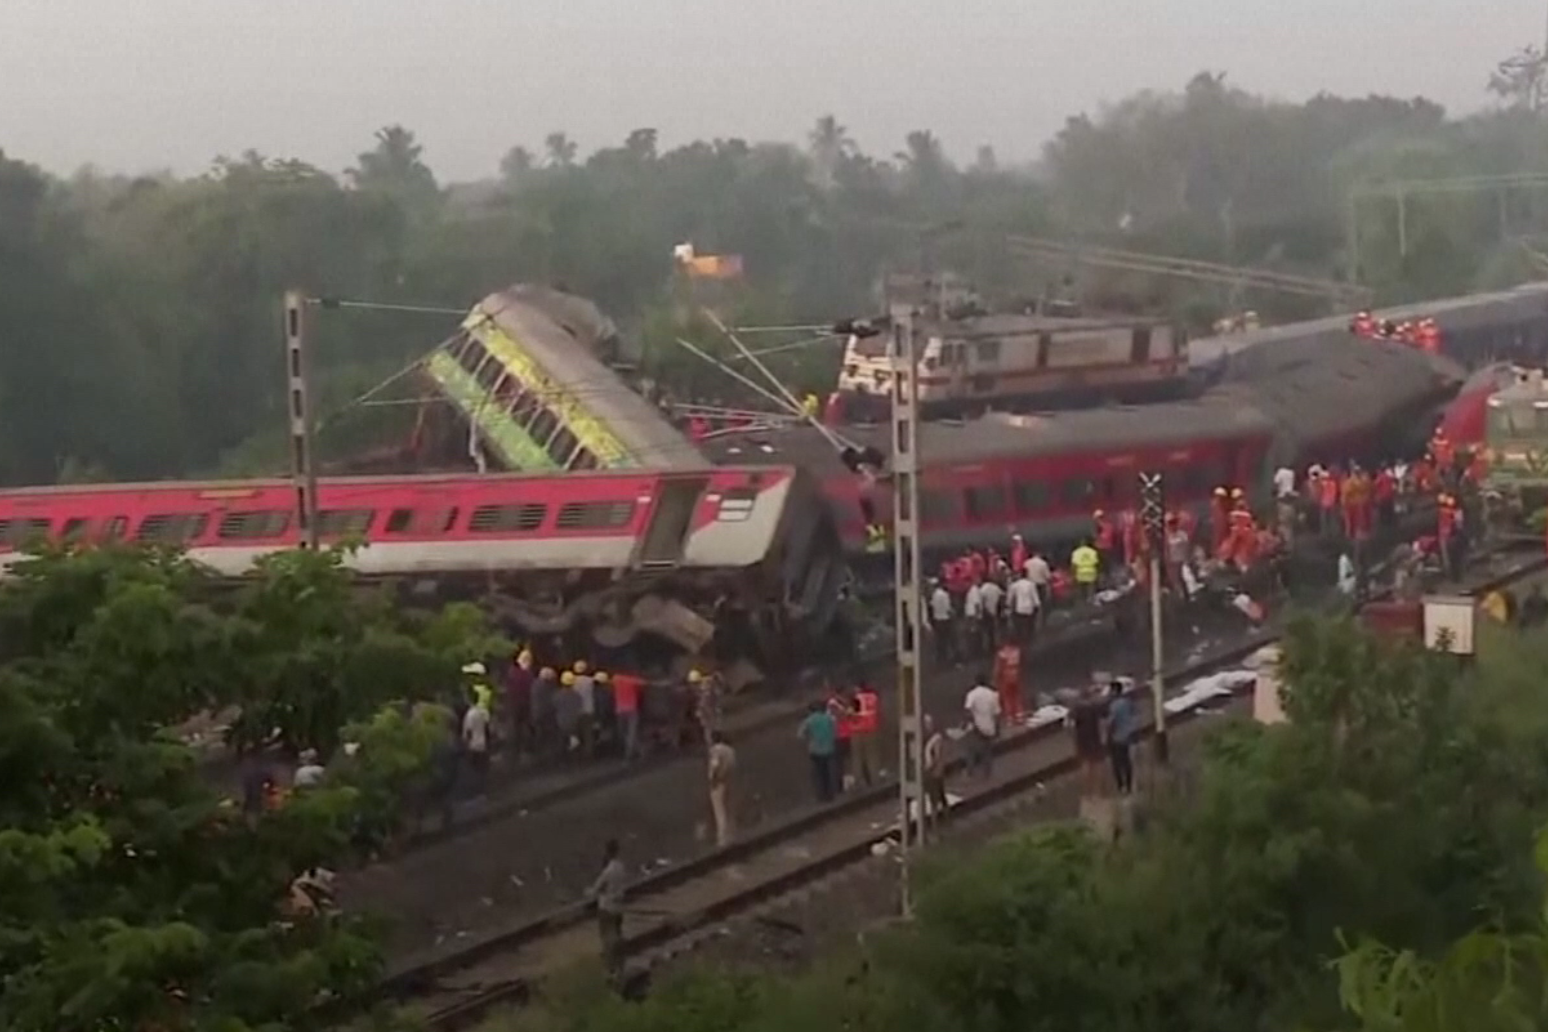 India minister says signal error led to rail crash that killed more than 300 